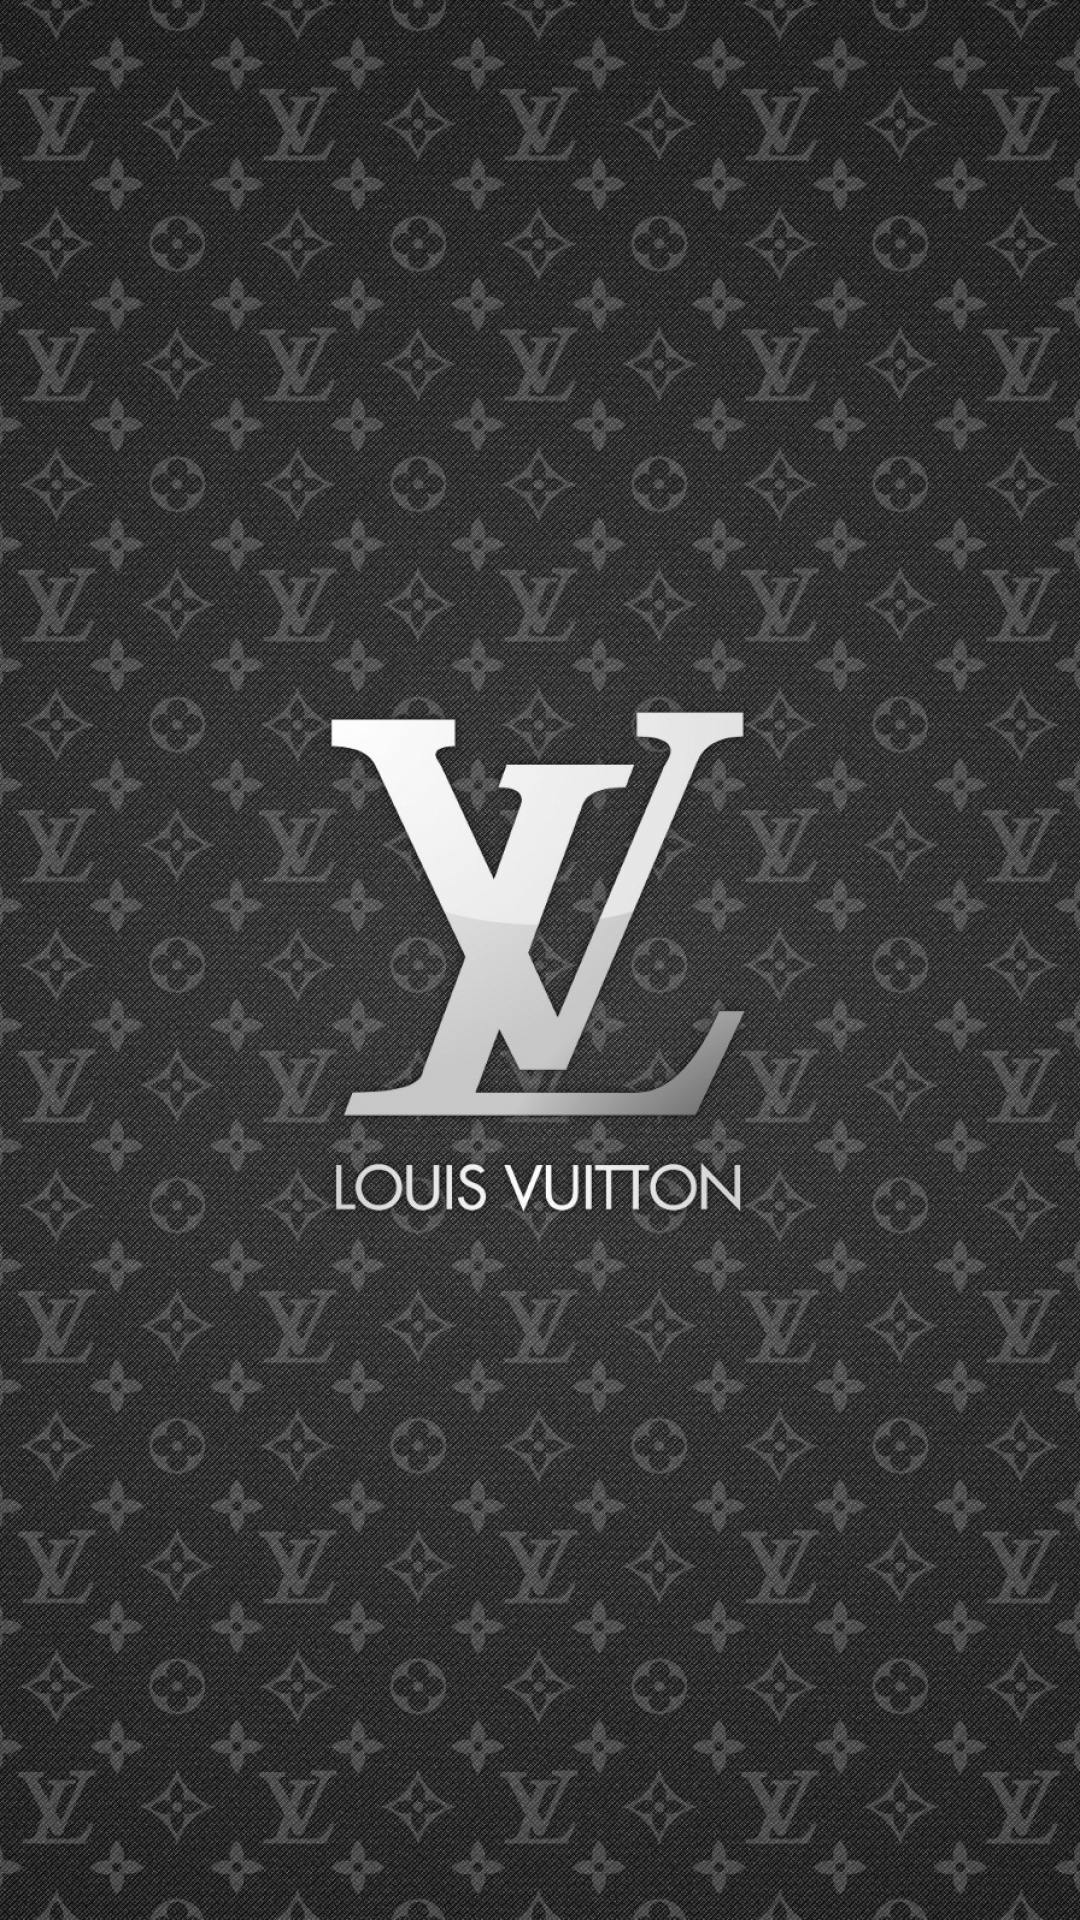 97 Supreme Louis Vuitton Wallpaper On Wallpapersafari